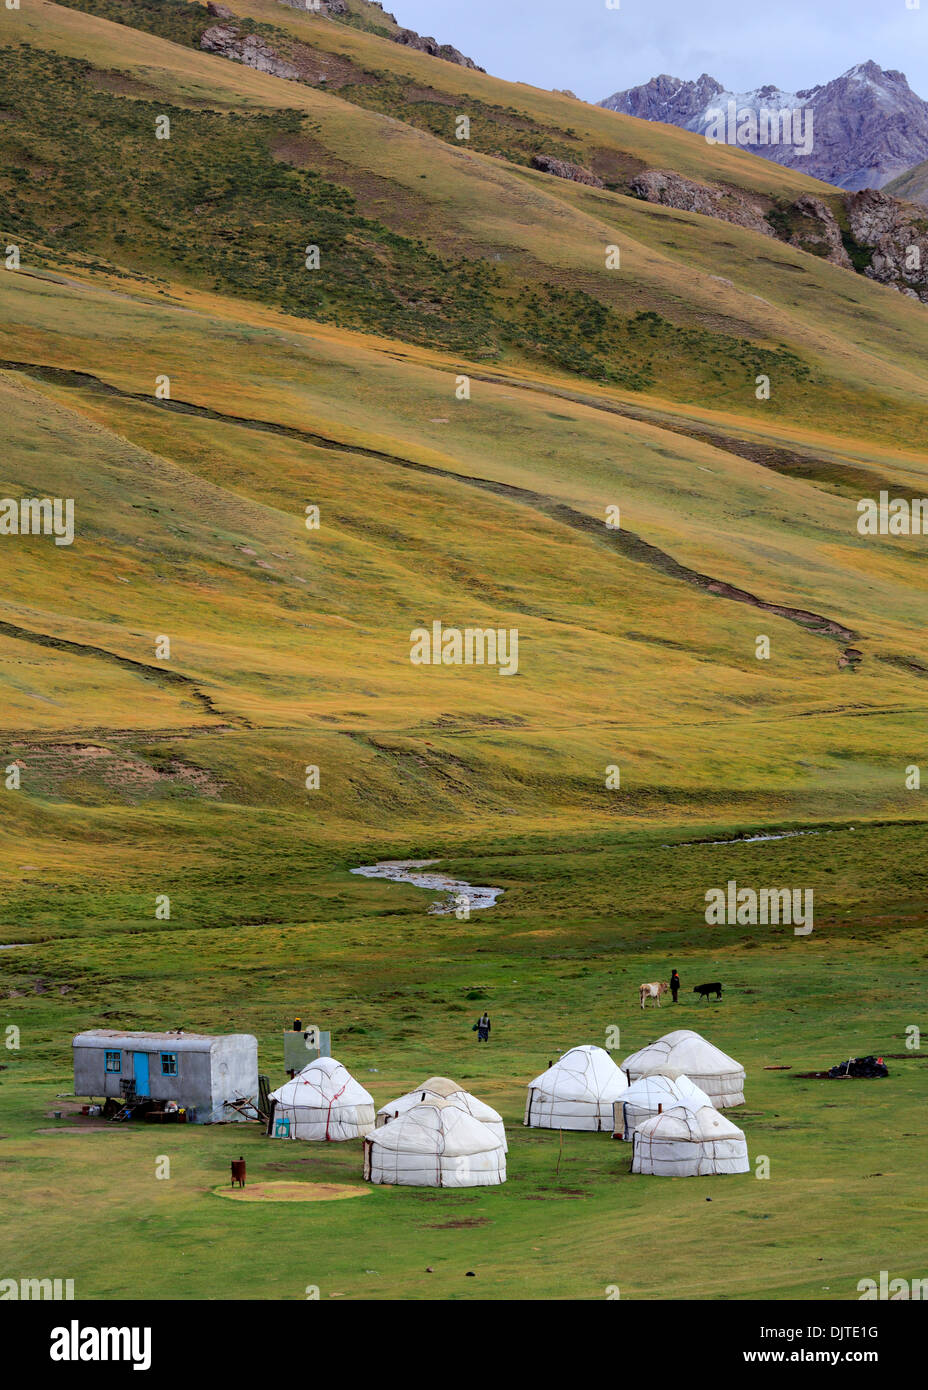 Yurt in Tash Rabat valley, Naryn oblast, Kyrgyzstan Stock Photo